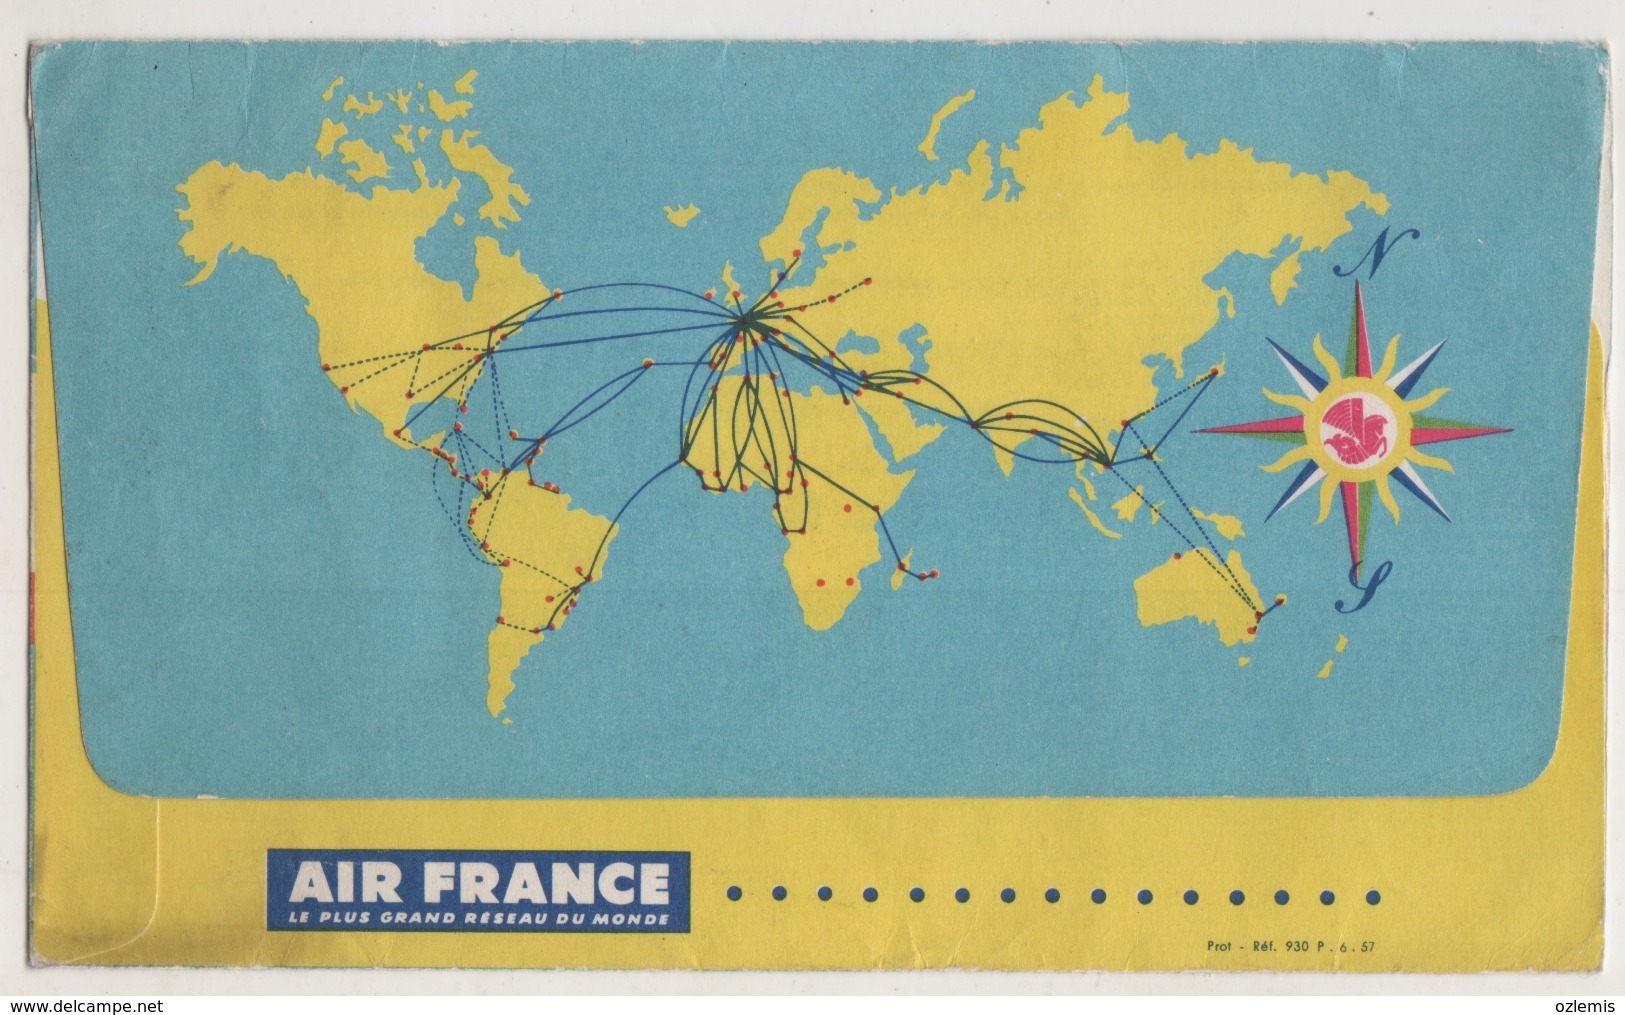 AIR FRANCE   AIRLINES TICKET COVER - Biglietti